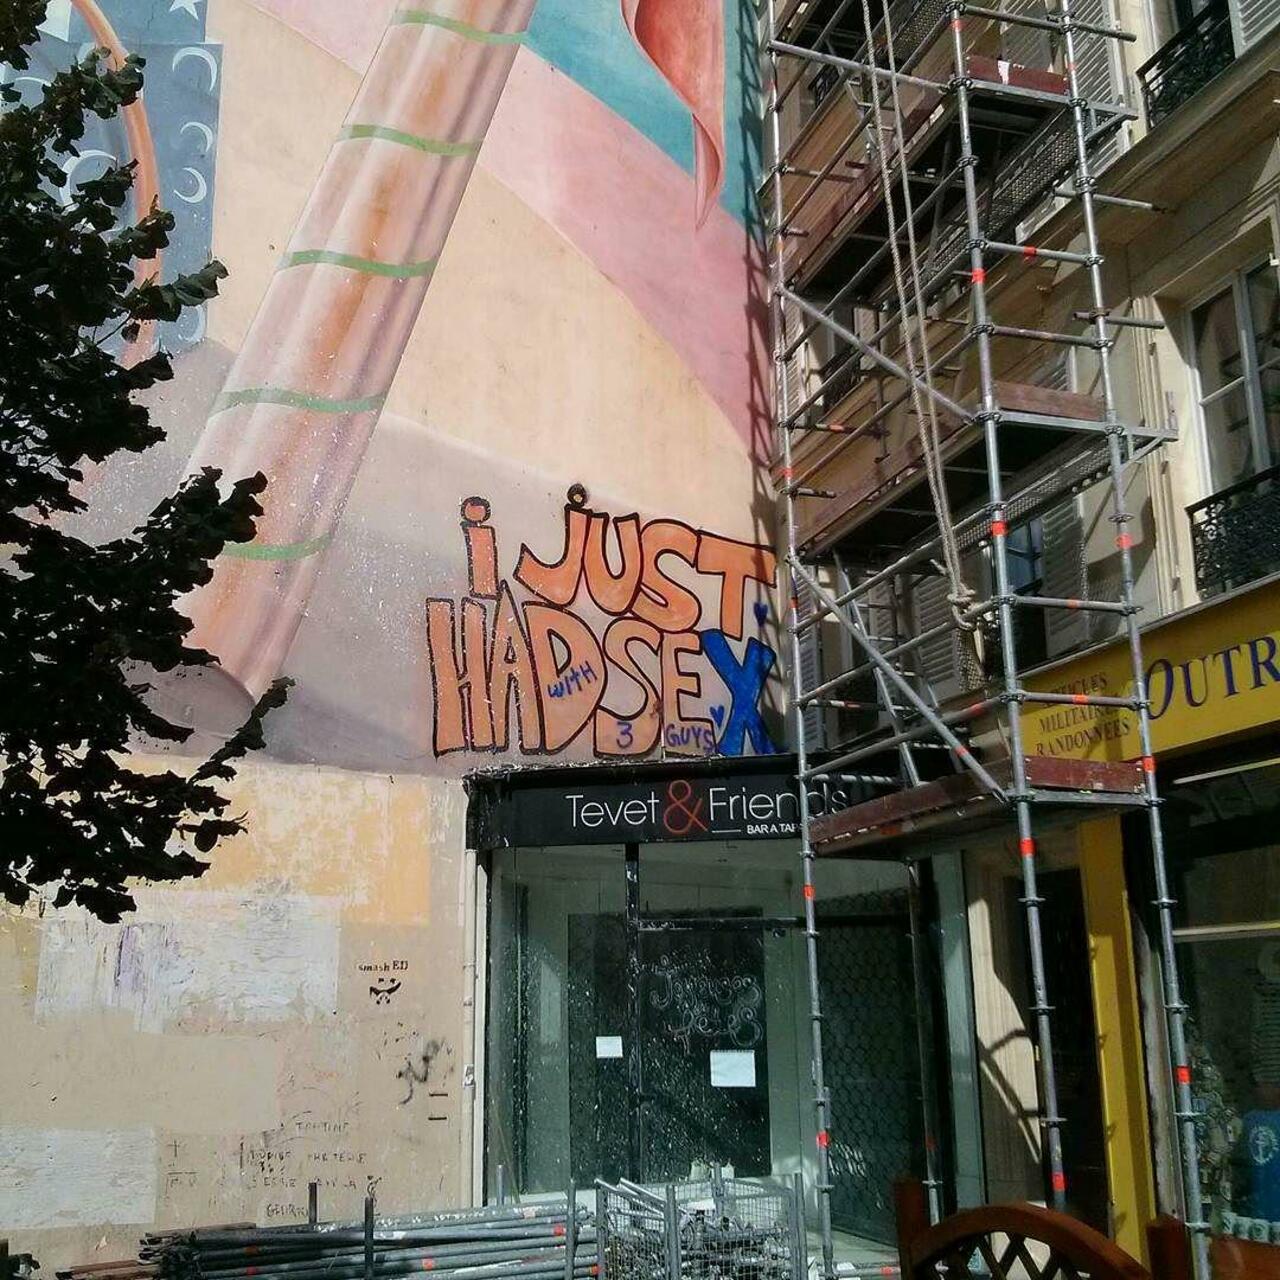 #Paris #graffiti photo by @francheetham http://ift.tt/1Mw6ez9 #StreetArt http://t.co/XI7YcTUbZH